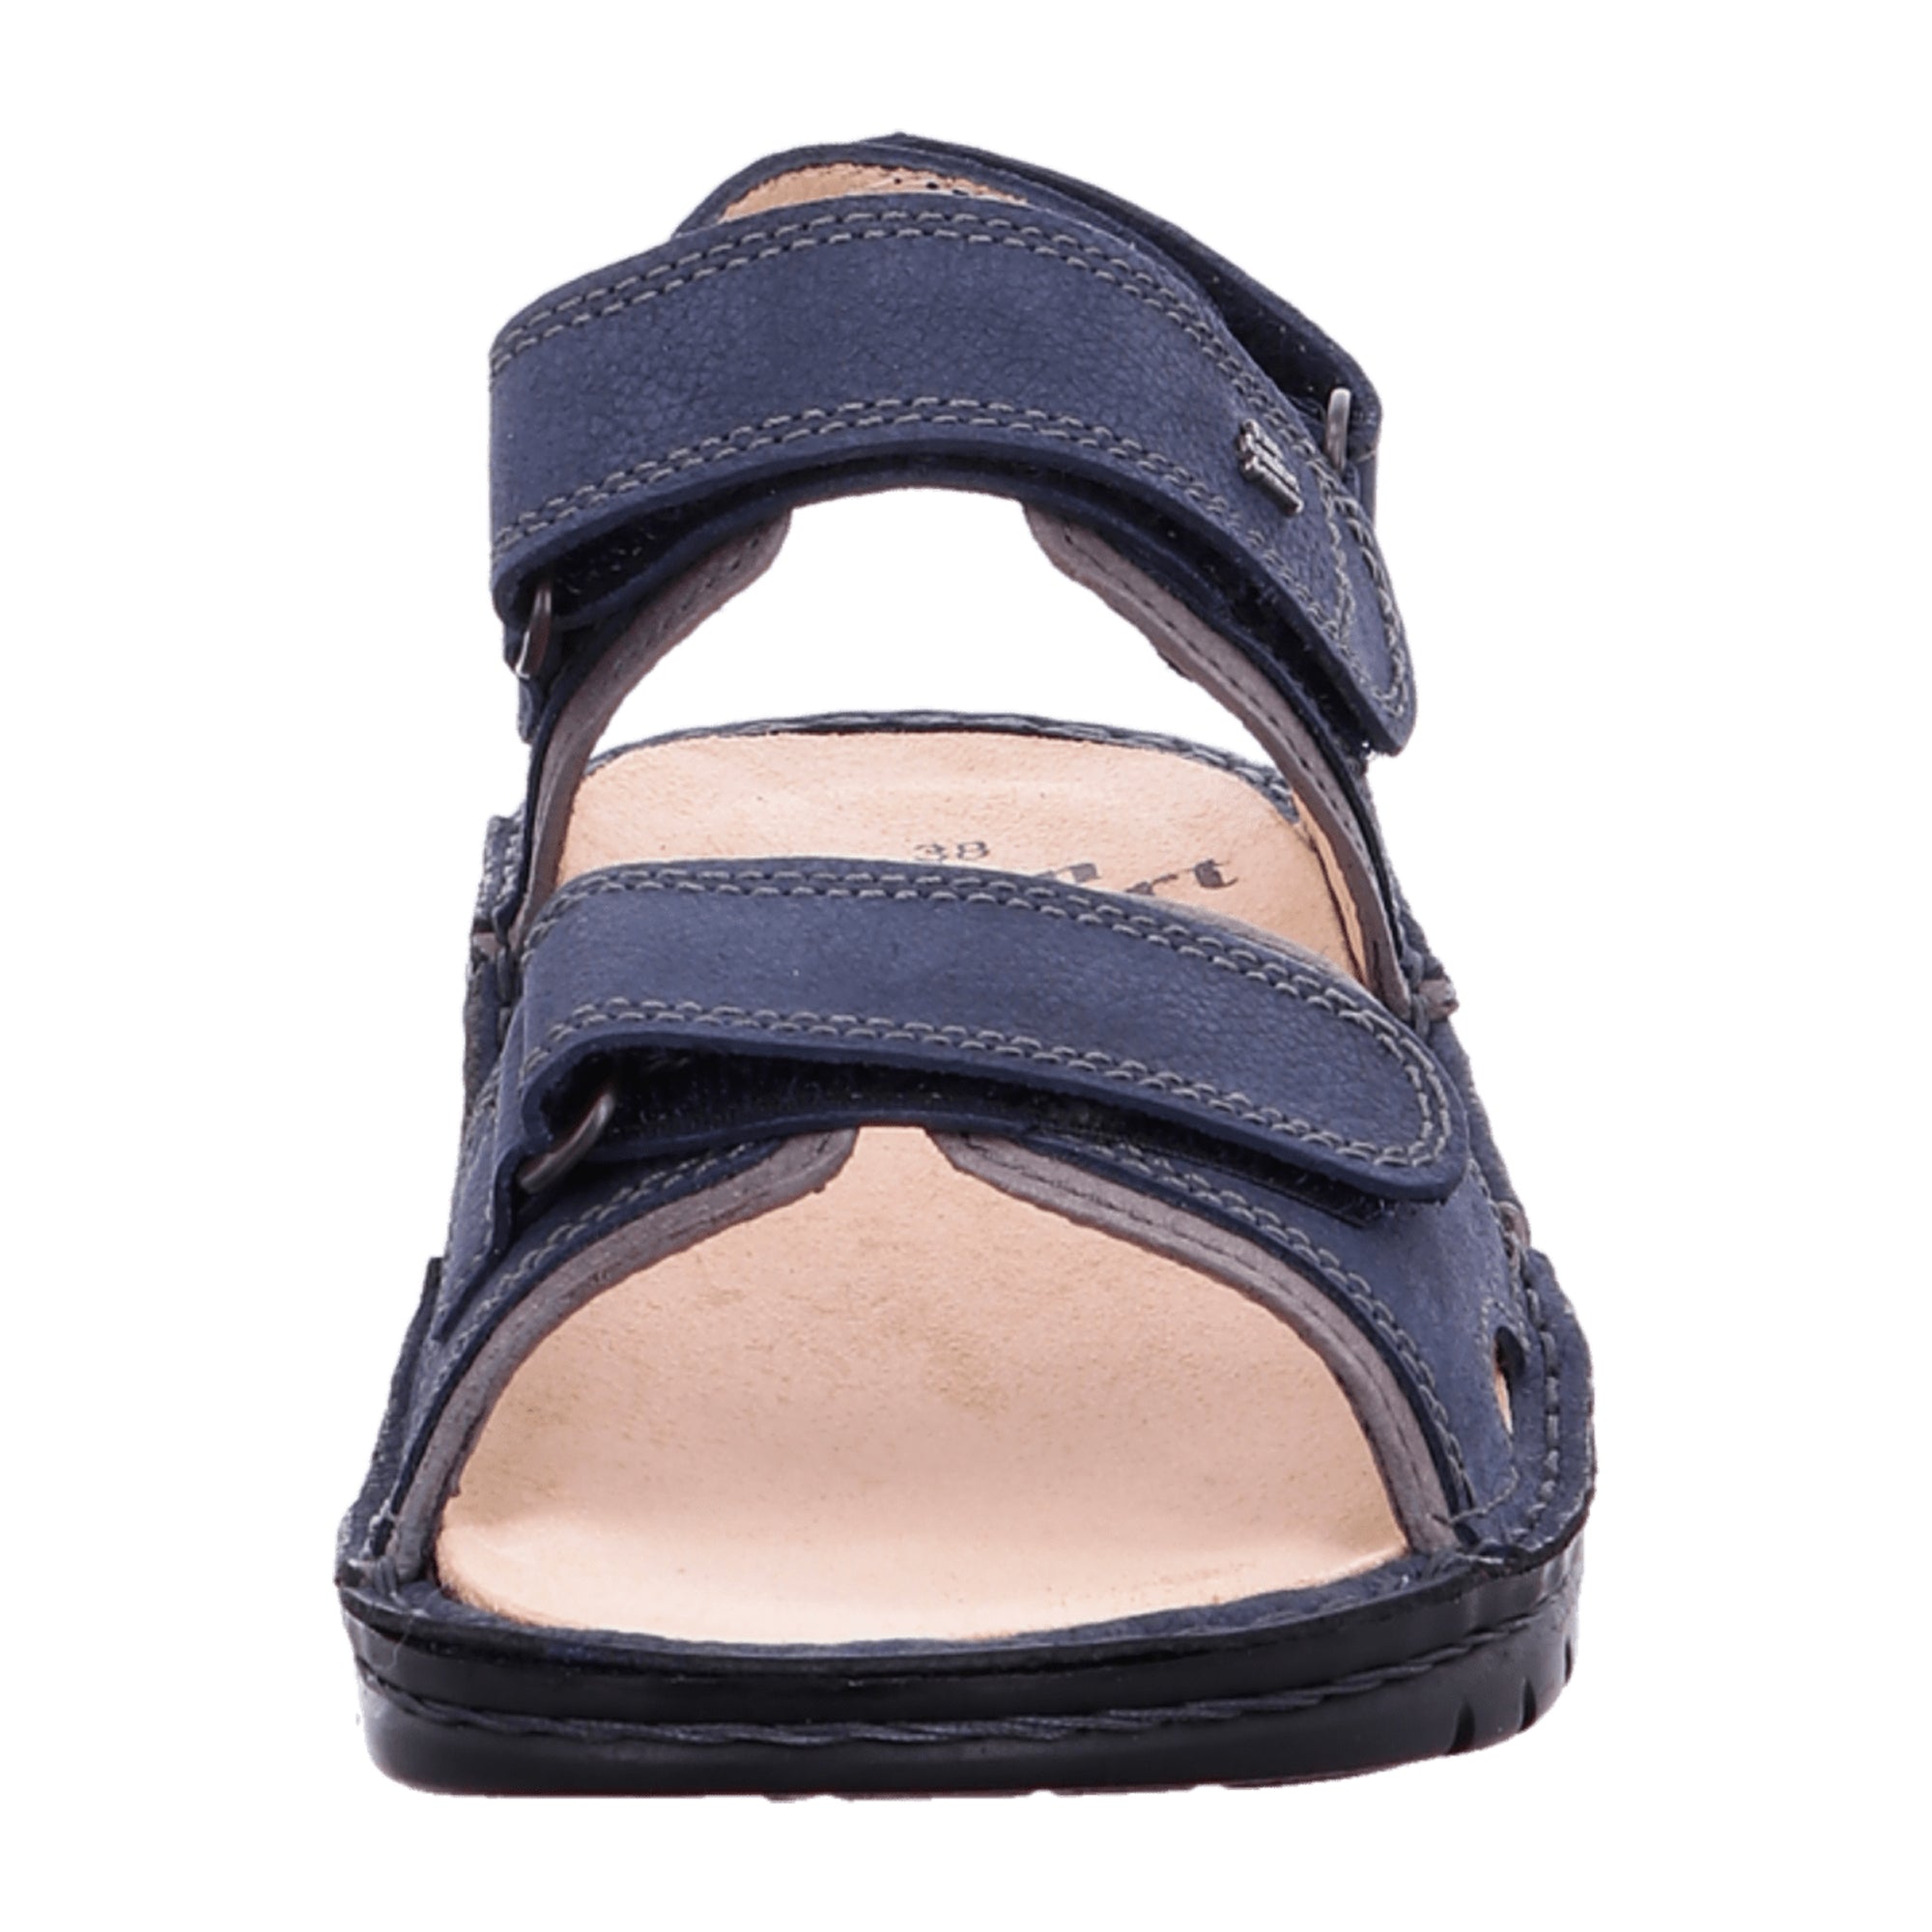 Finn Comfort Yuma Women's Walking Sandals - Stylish Blue Comfort Shoes